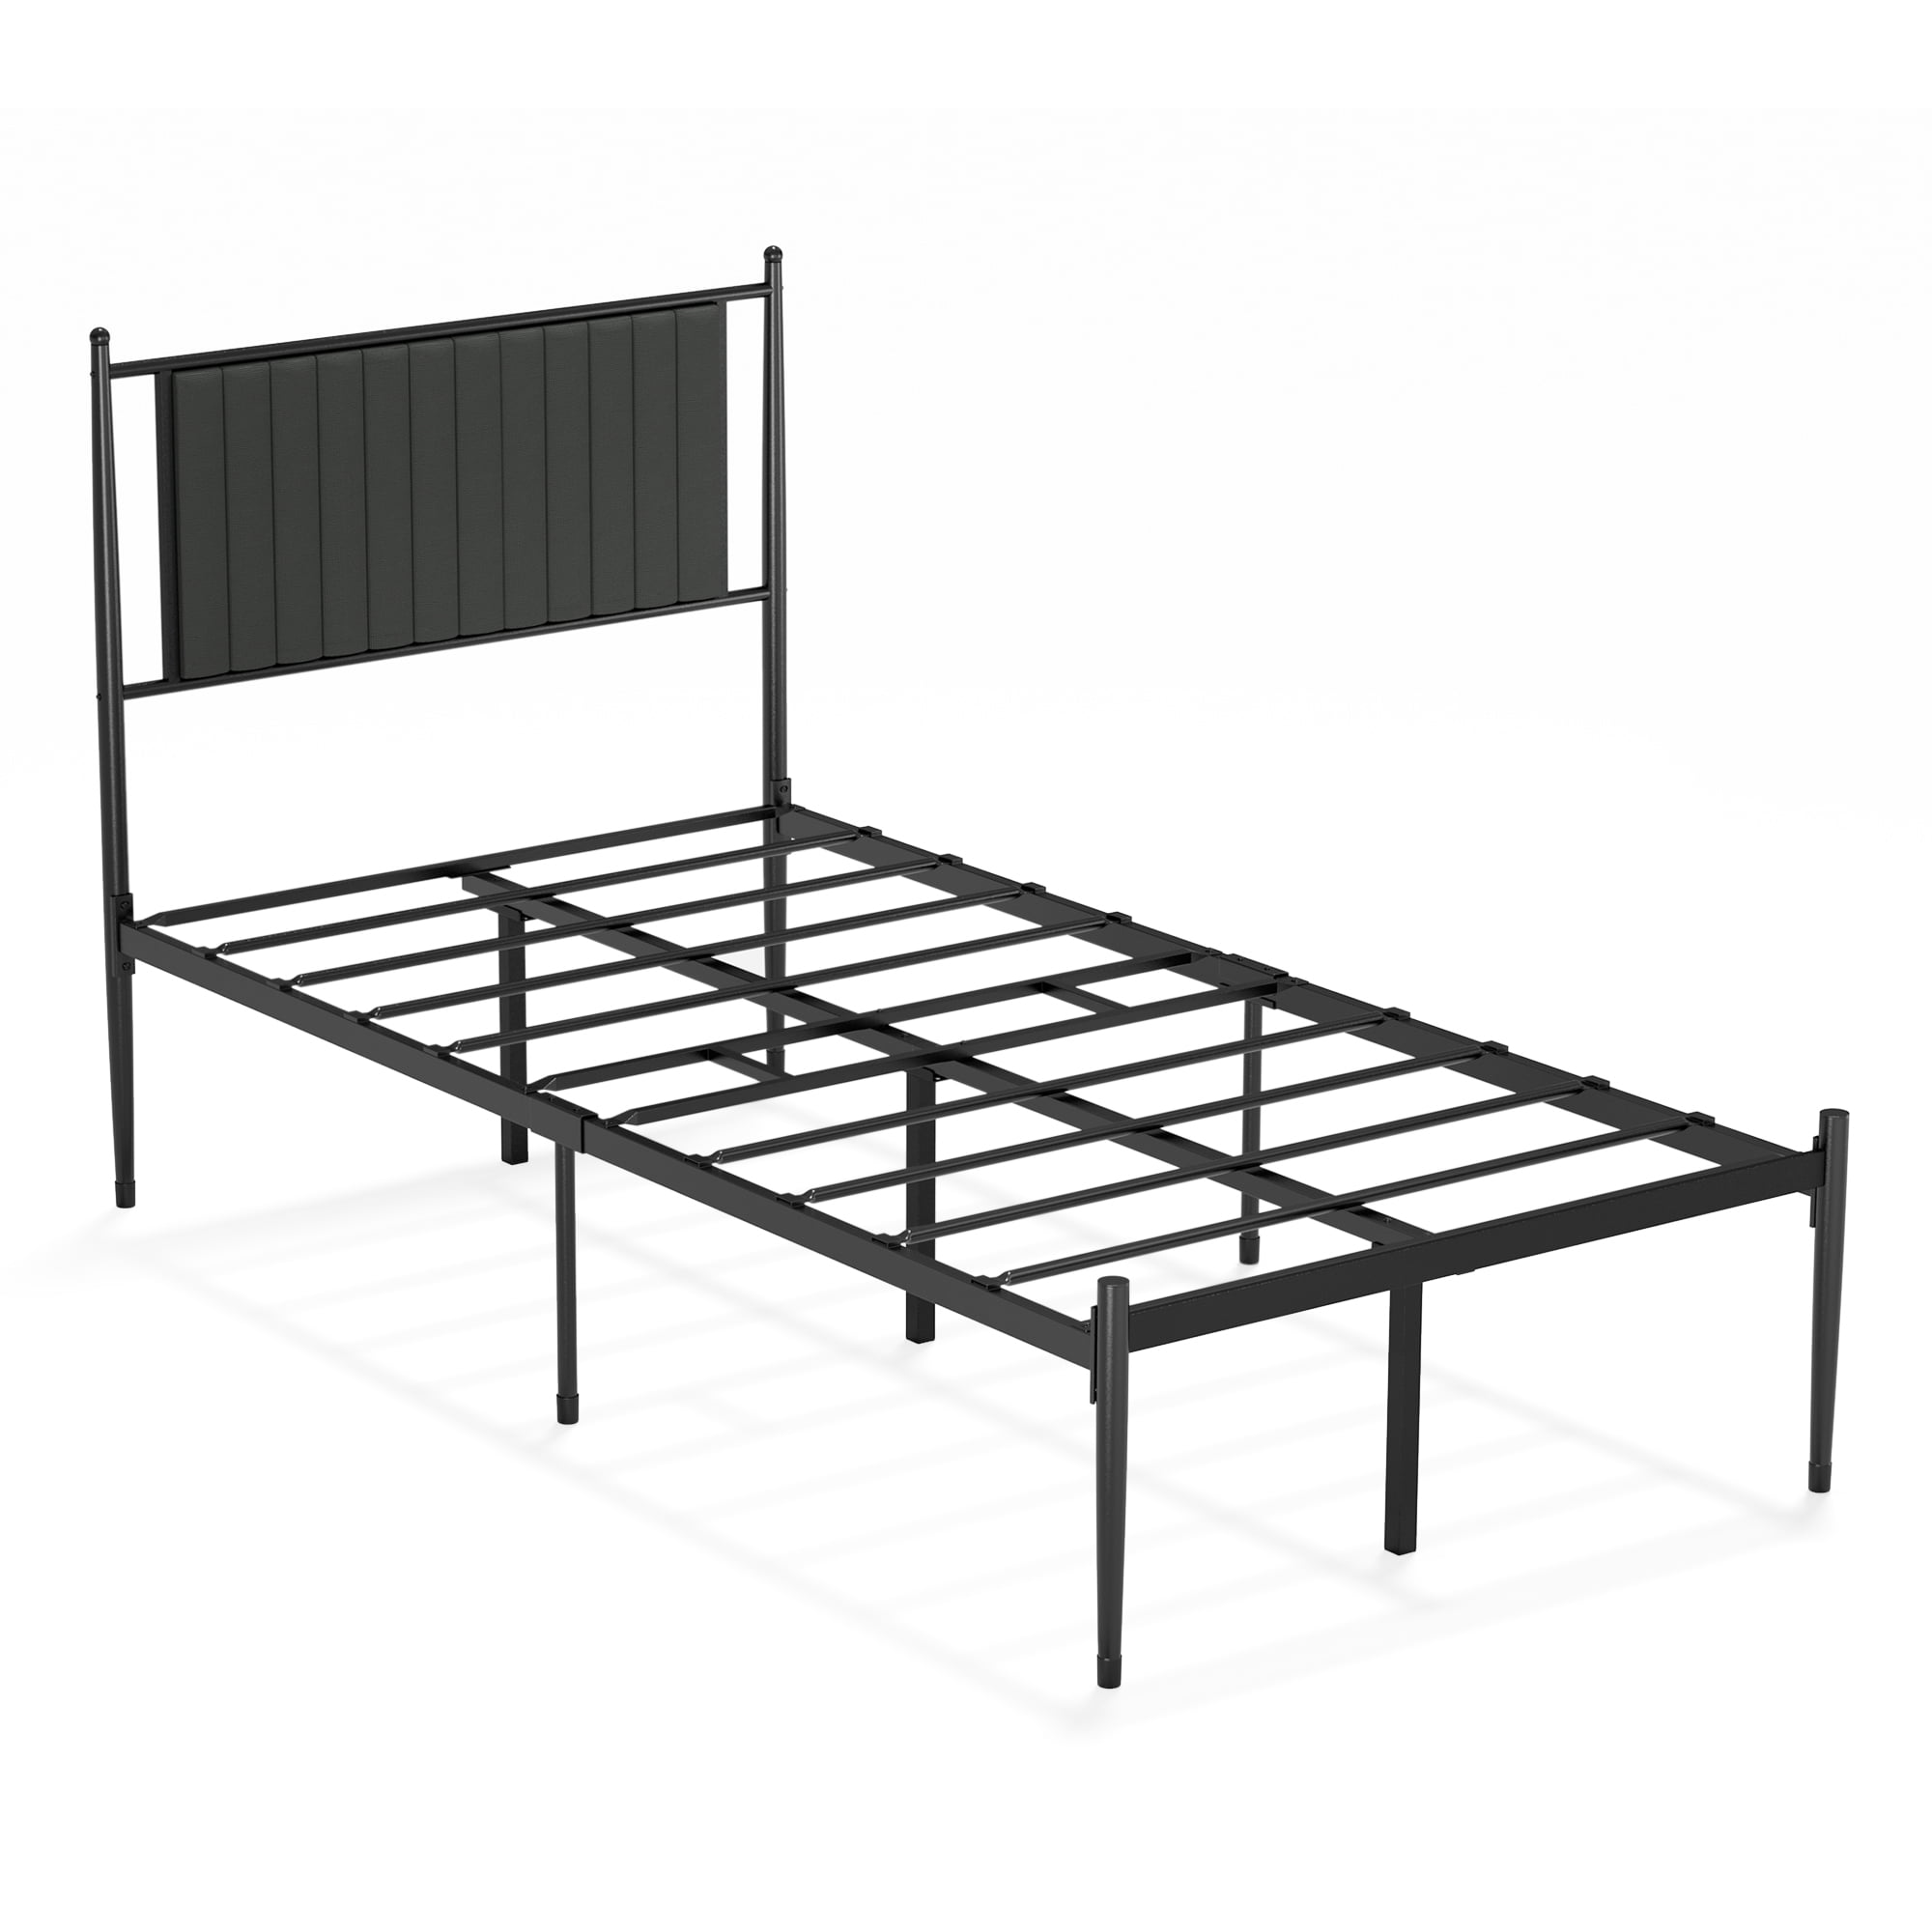 Details about   14 Inch Metal Platform Bed w/ Heavy Duty Steel Slat Mattress Foundation Black 